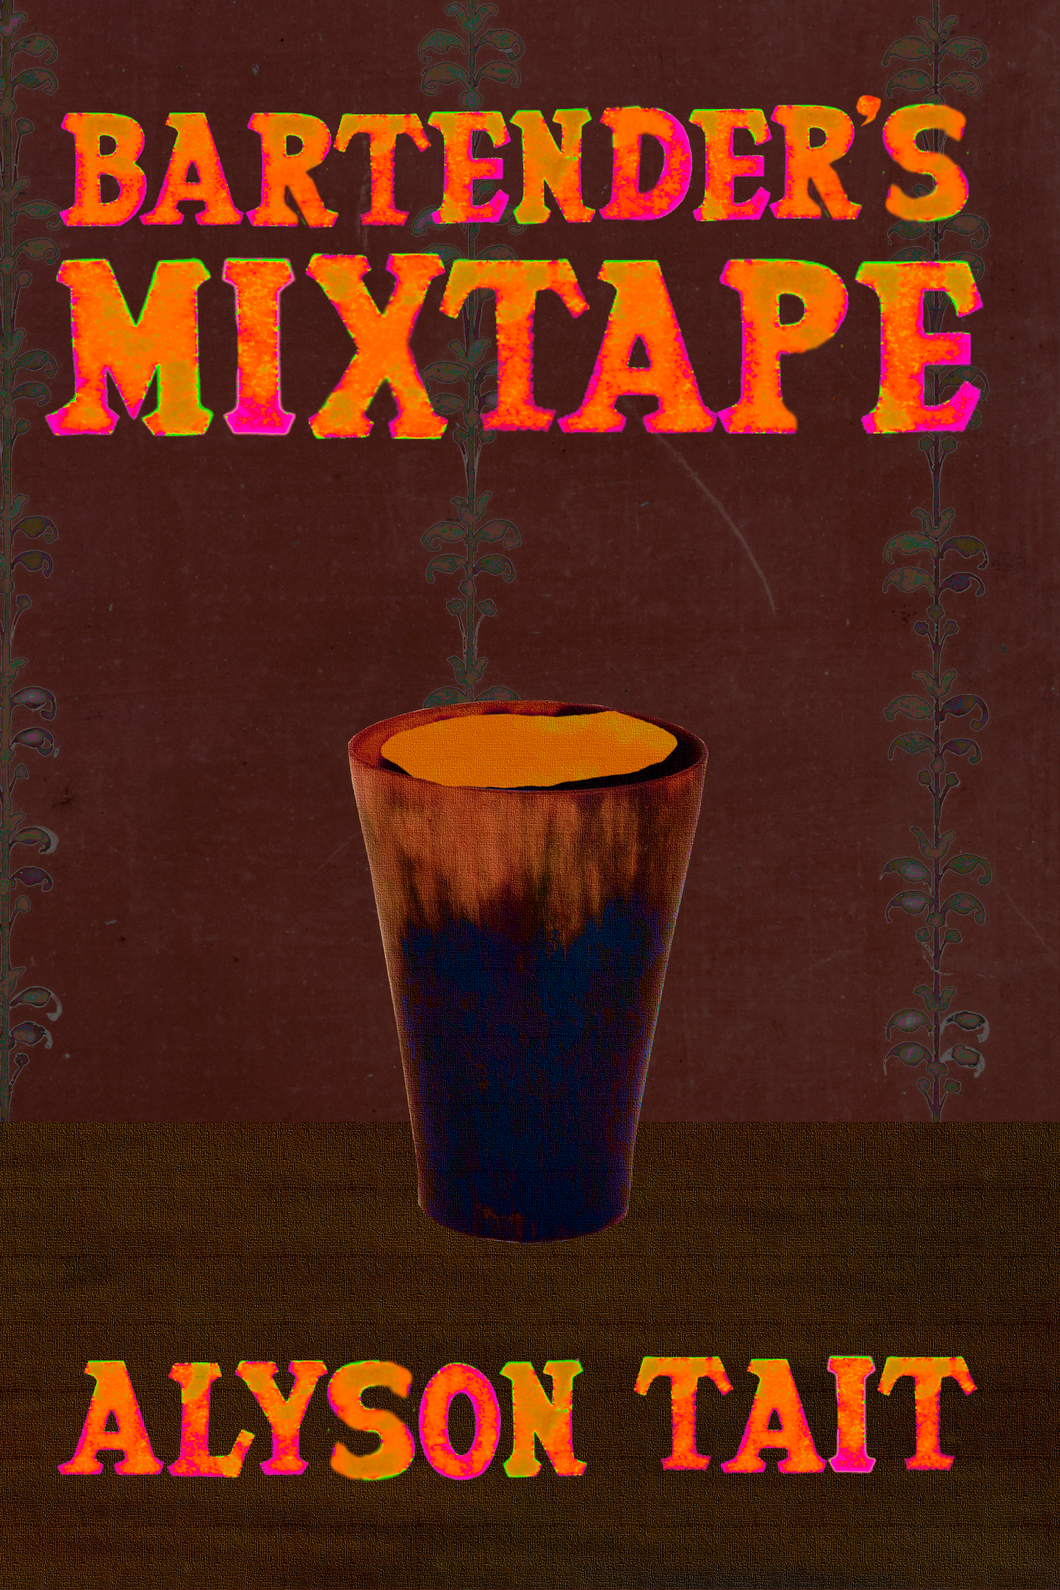 Bartender's Mixtape, by Alyson Tait-Print Books-Bottlecap Press